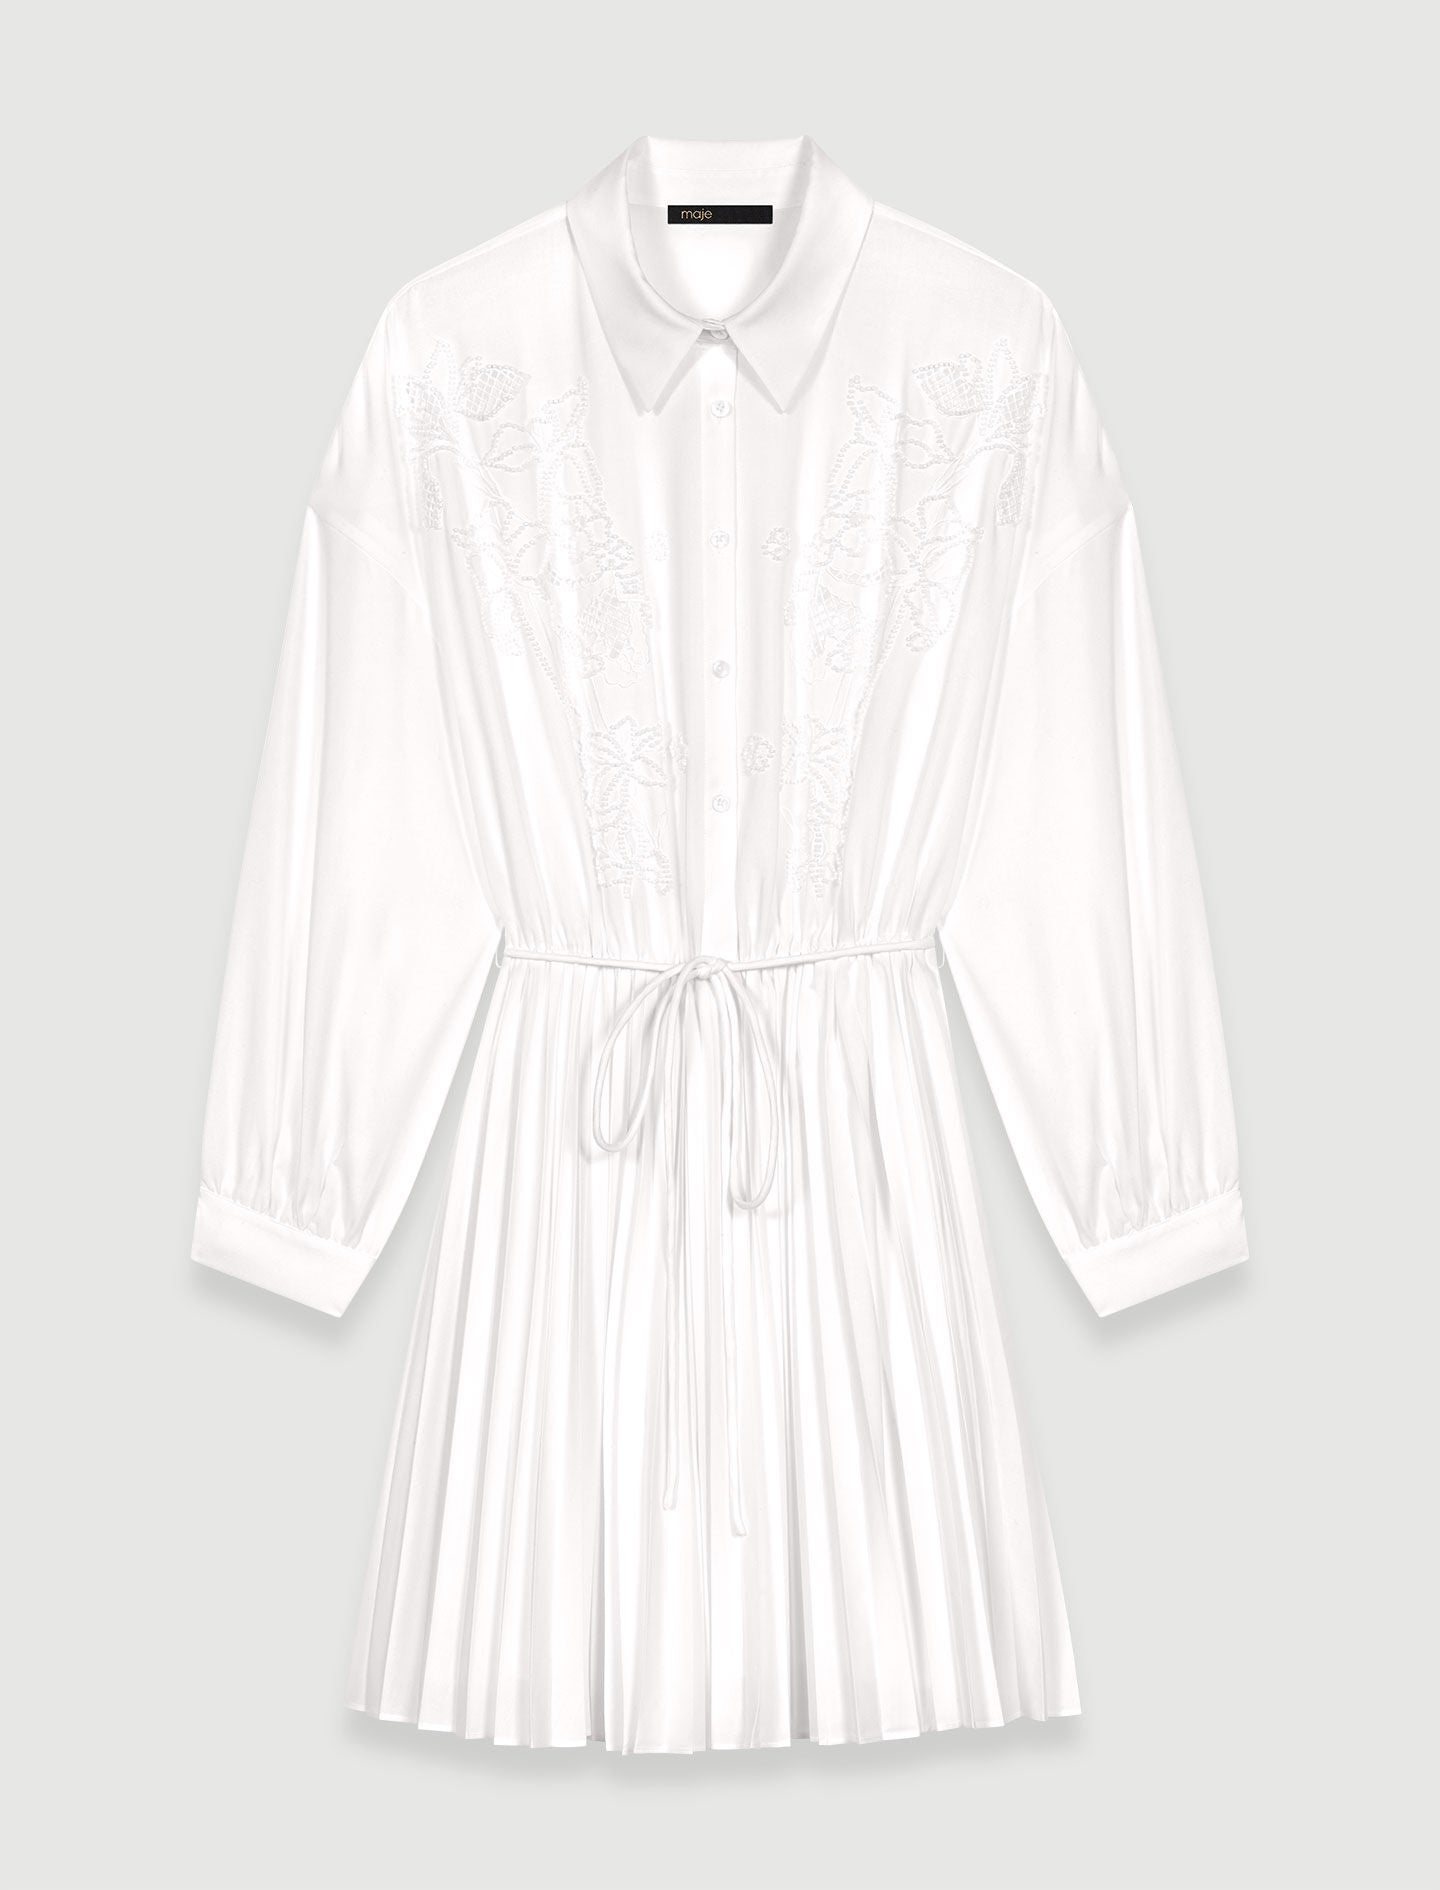 White-short shirt dress